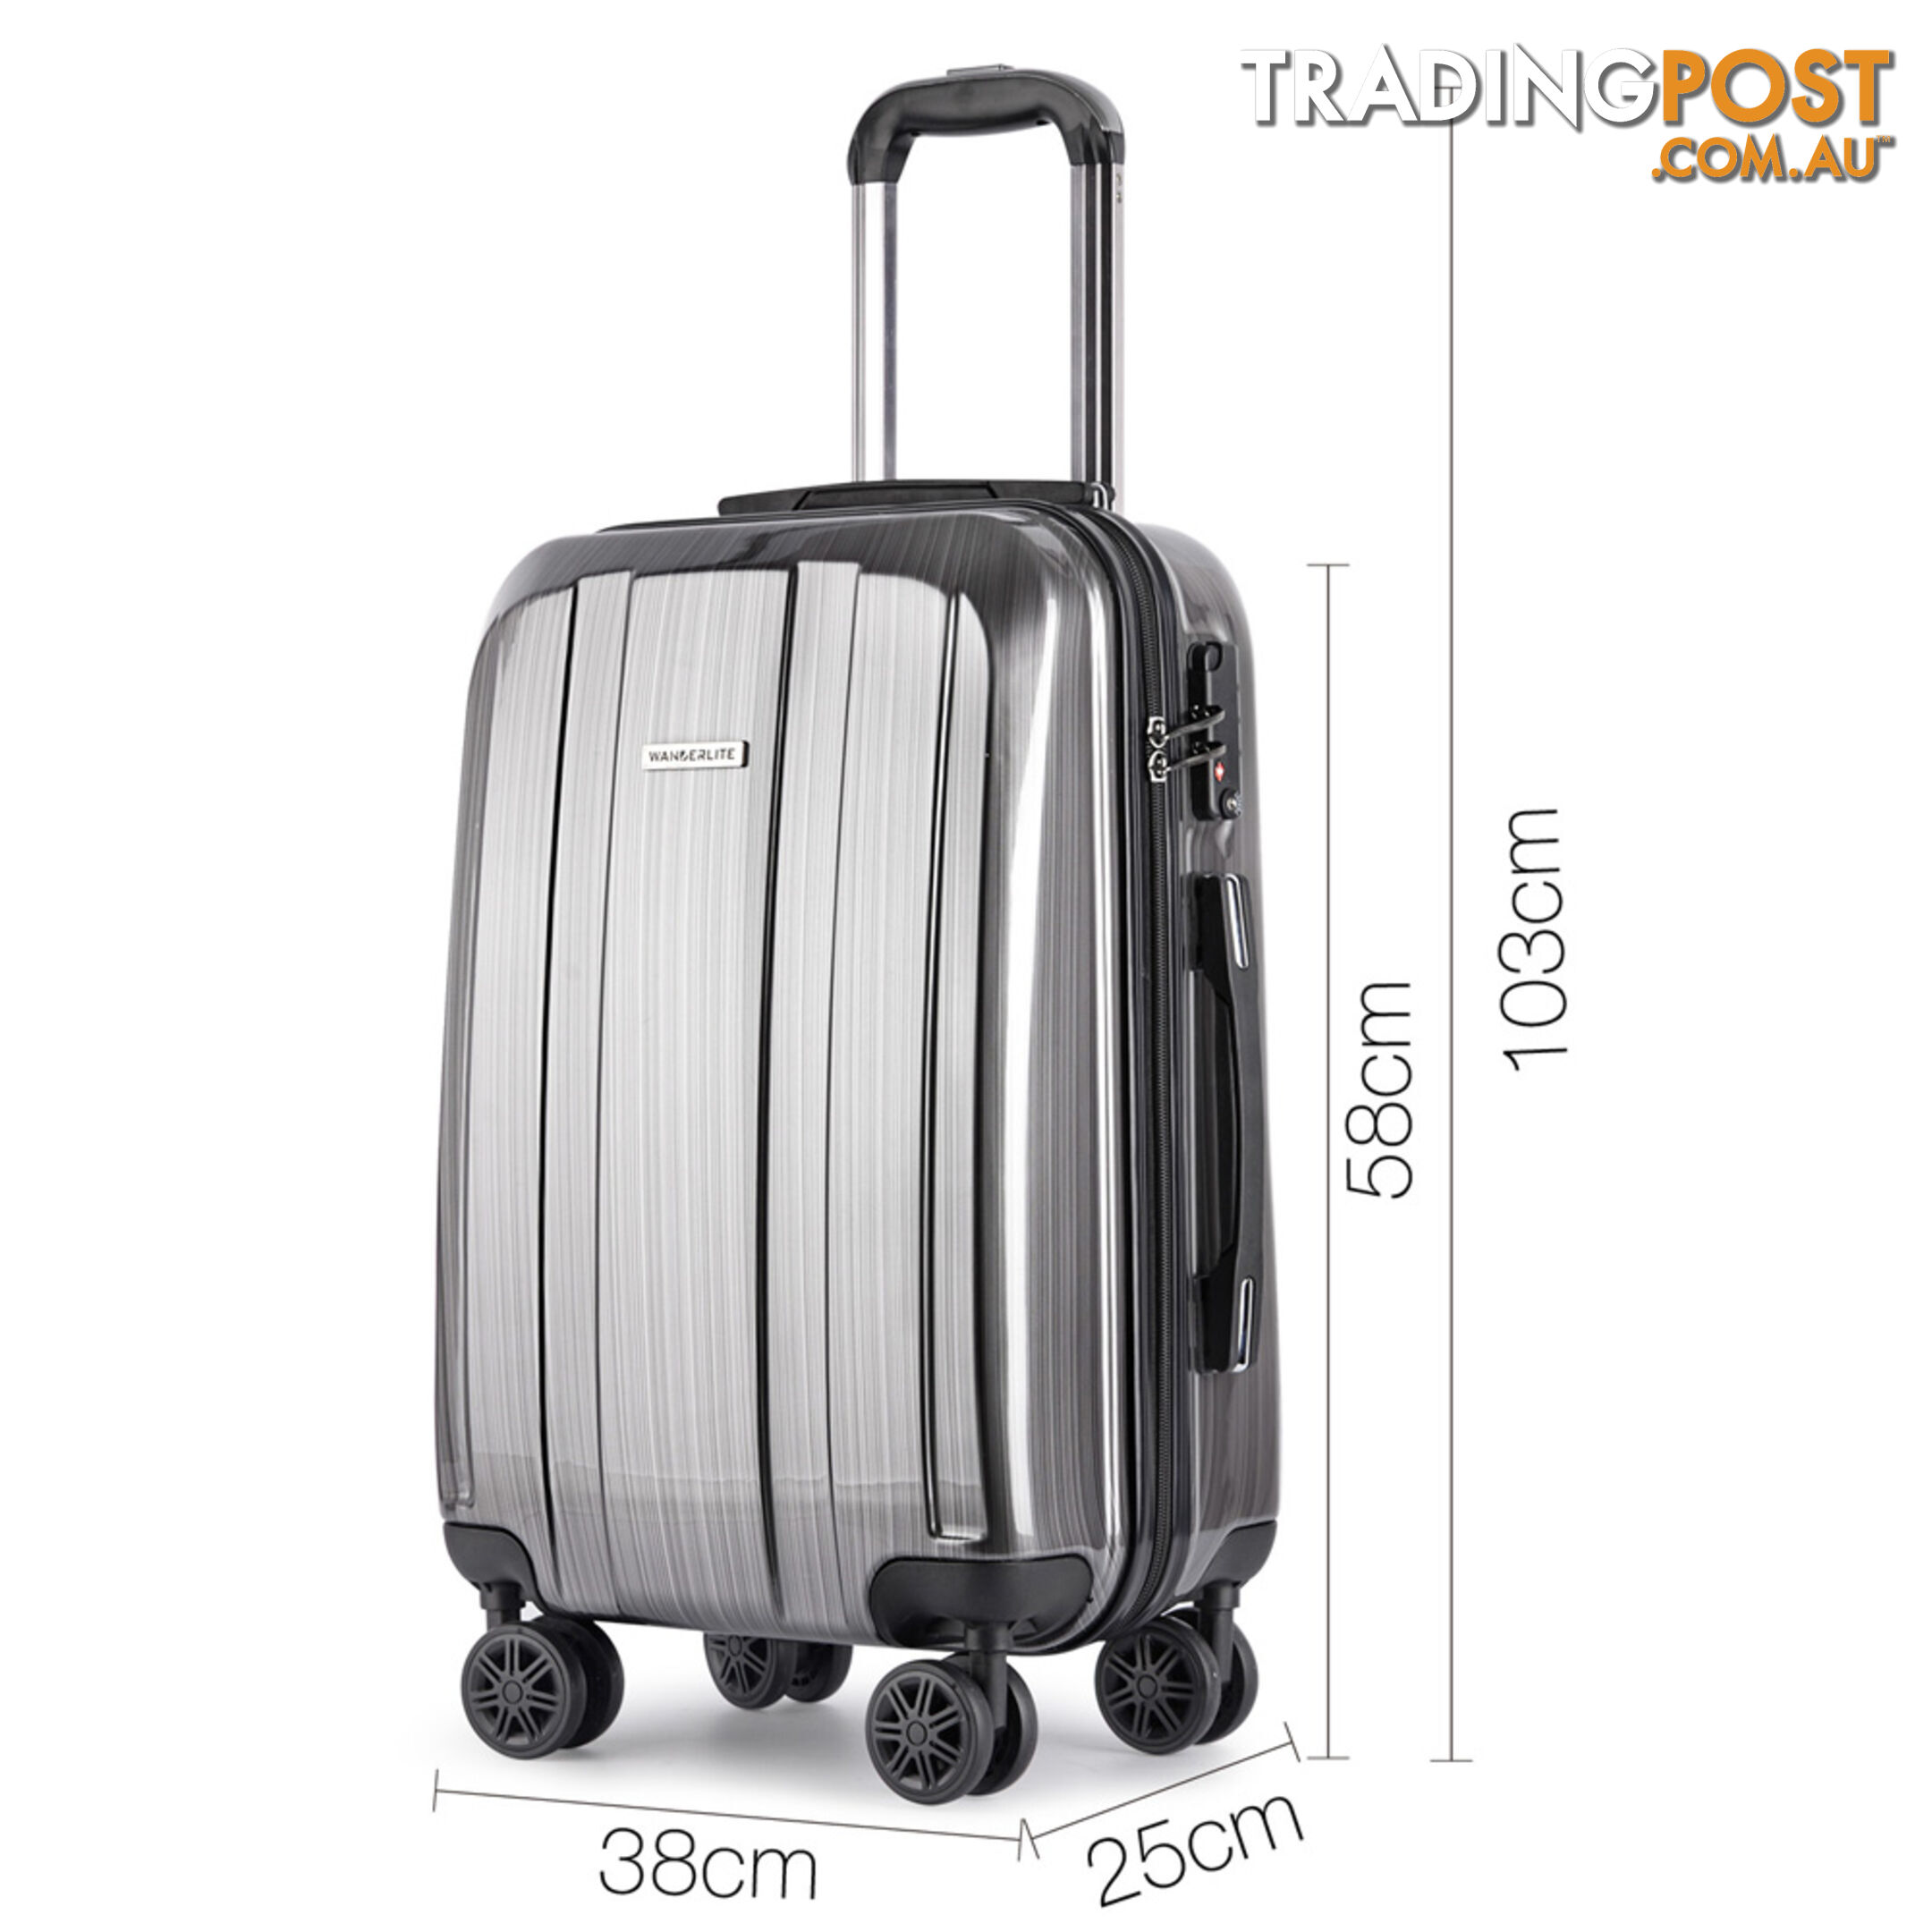 Set of 2 Premium Hard Shell Travel Luggage with TSA Lock - Grey